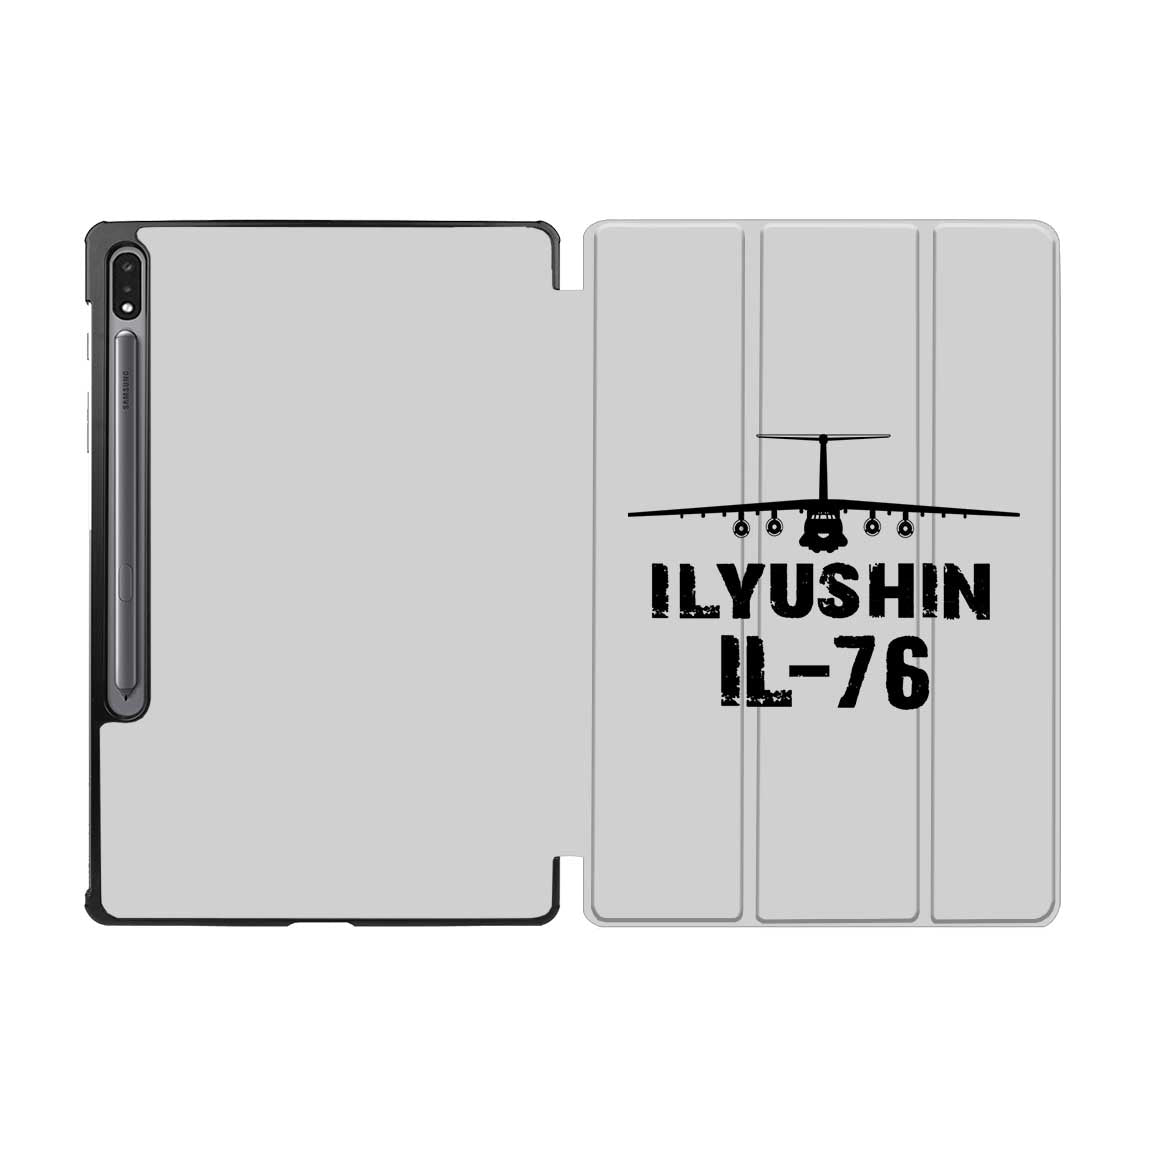 ILyushin IL-76 & Plane Designed Samsung Tablet Cases